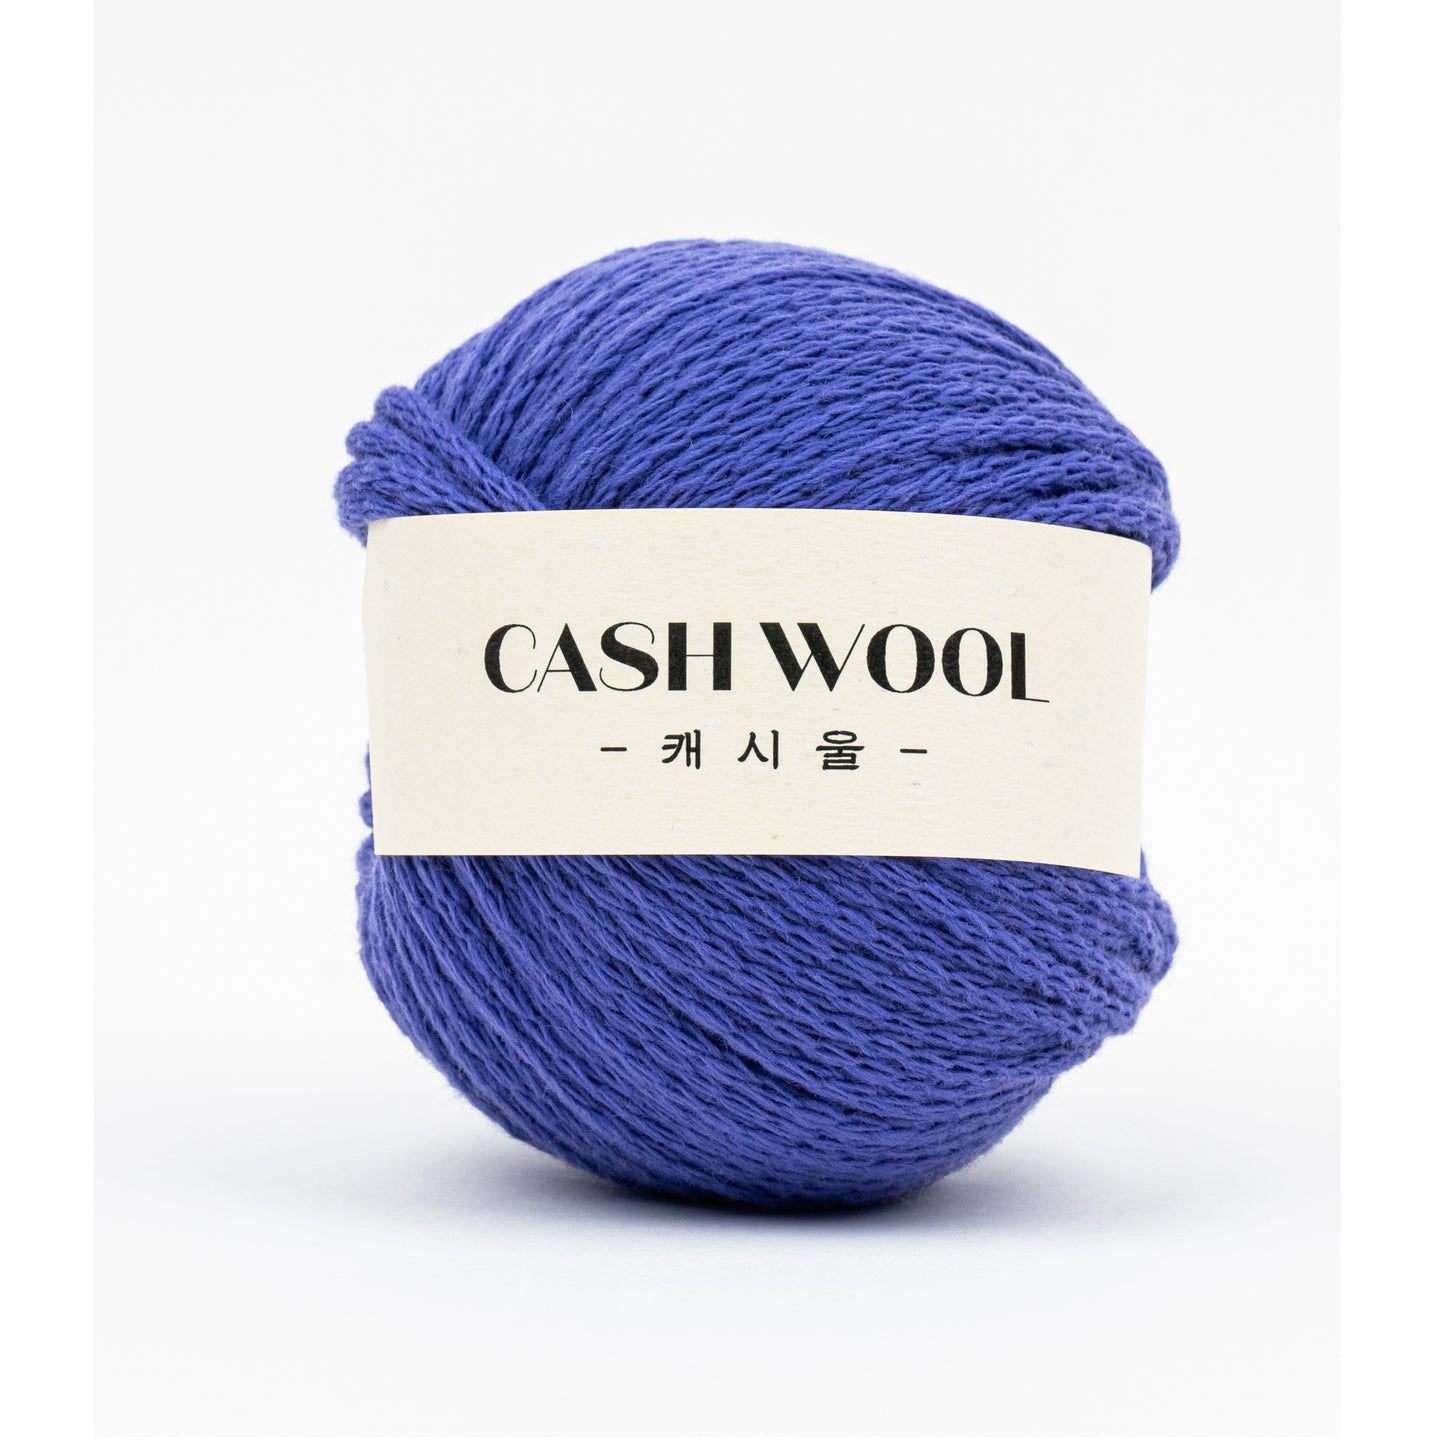 CASHWOOL, Cashmere Wool Nylon mixed yarn, 10 pretty colors